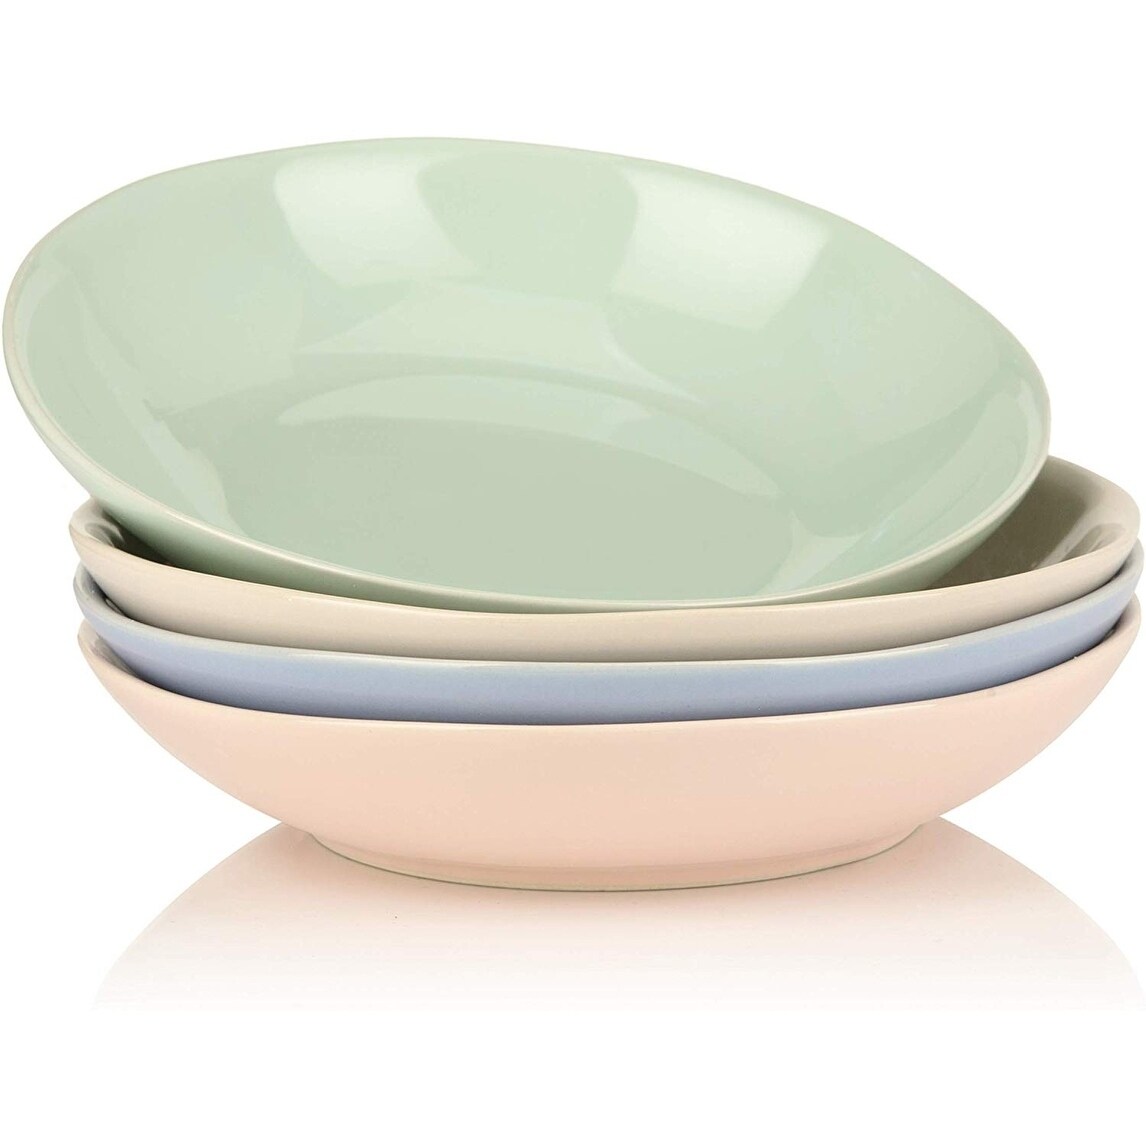 https://ak1.ostkcdn.com/images/products/30081958/Porcelain-Salad-Plates-8-Inch-Round-Soup-Plates-Dessert-Dishes-Serving-Platter-Set-4-Pieces-20bc368c-7d1c-4598-a77a-9b01be56a265.jpg